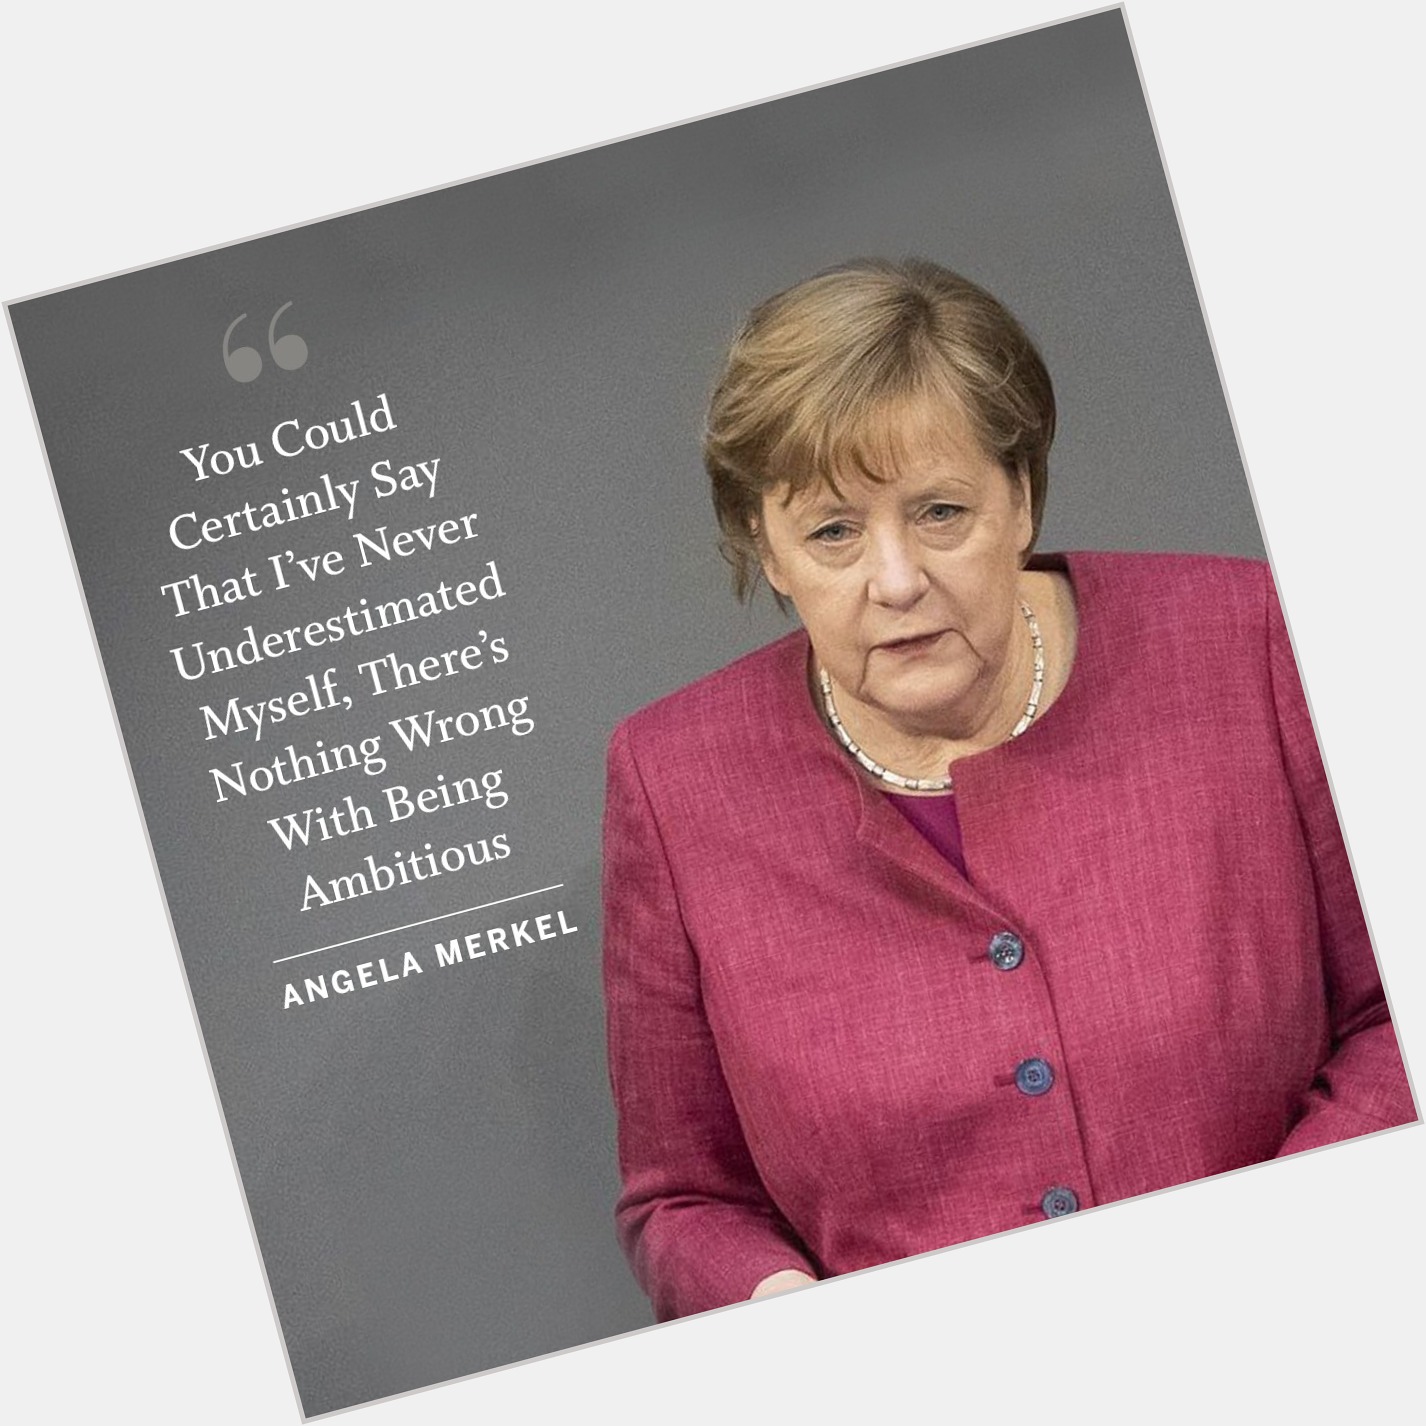 Wishing Angela Merkel a very happy birthday!  